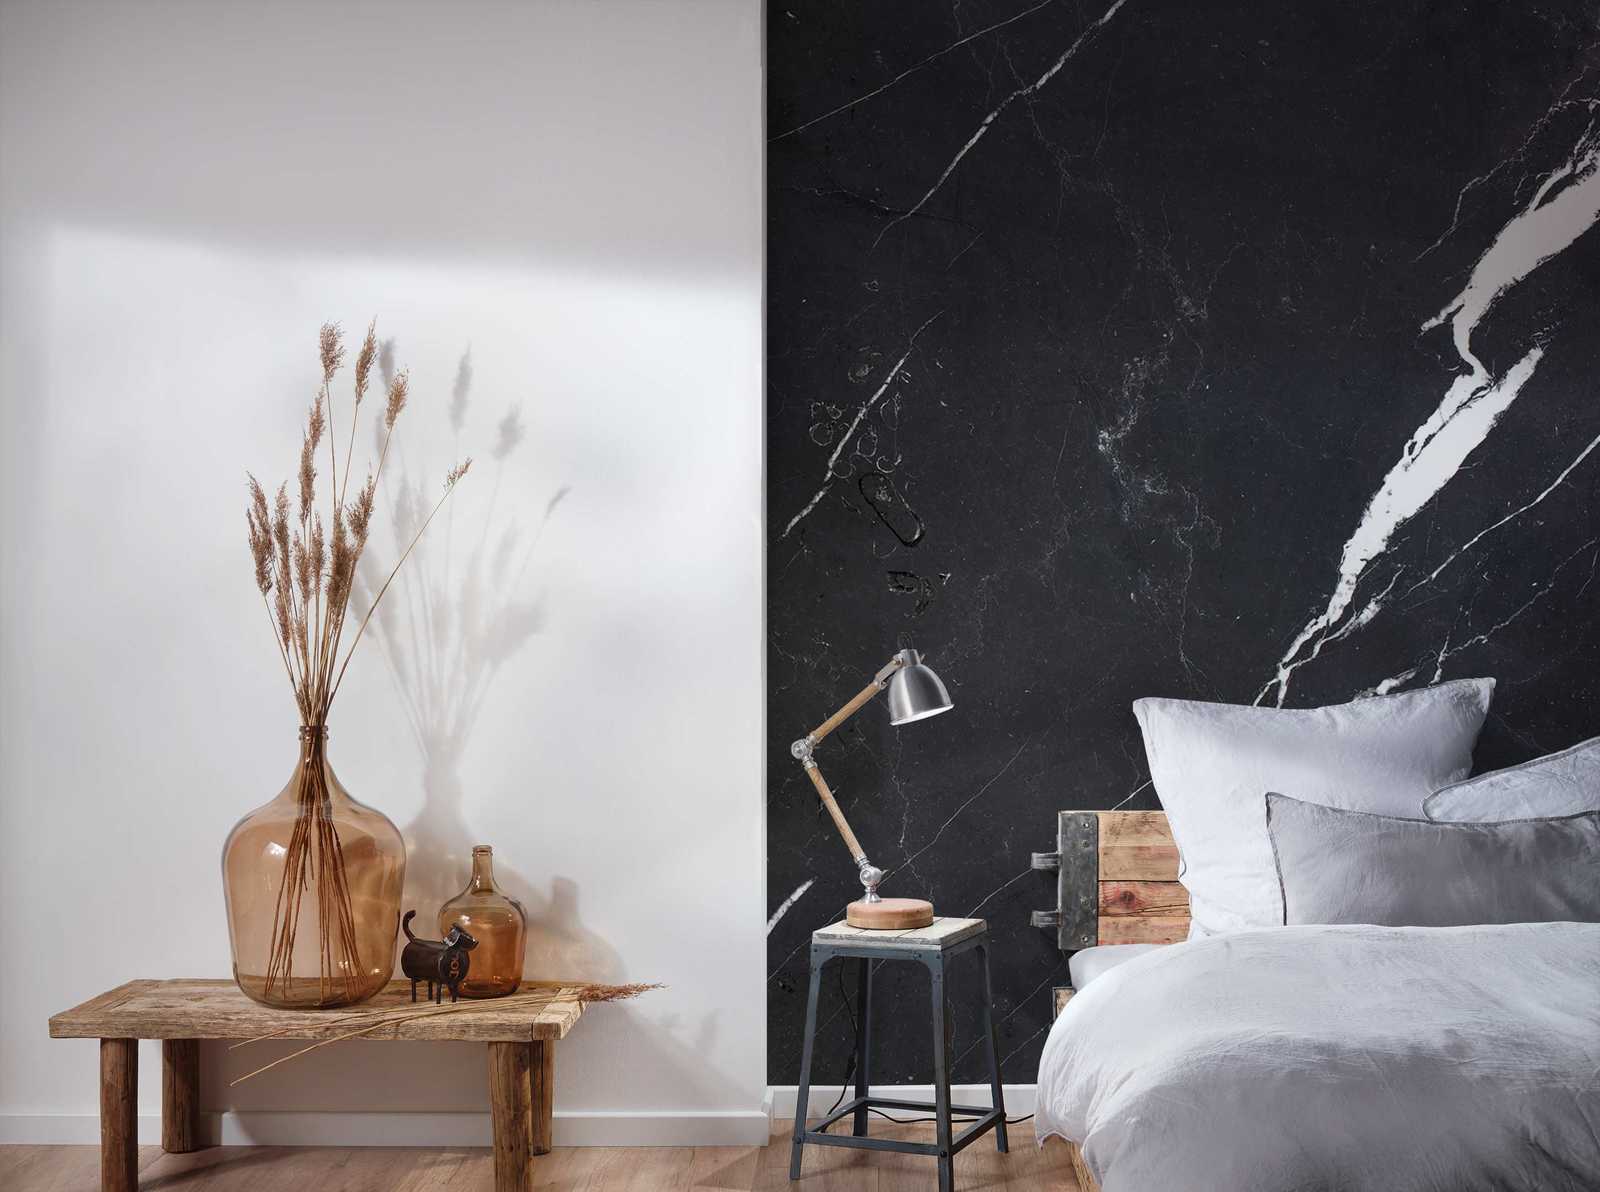             Photo wallpaper black marble white marbled - Black, White
        